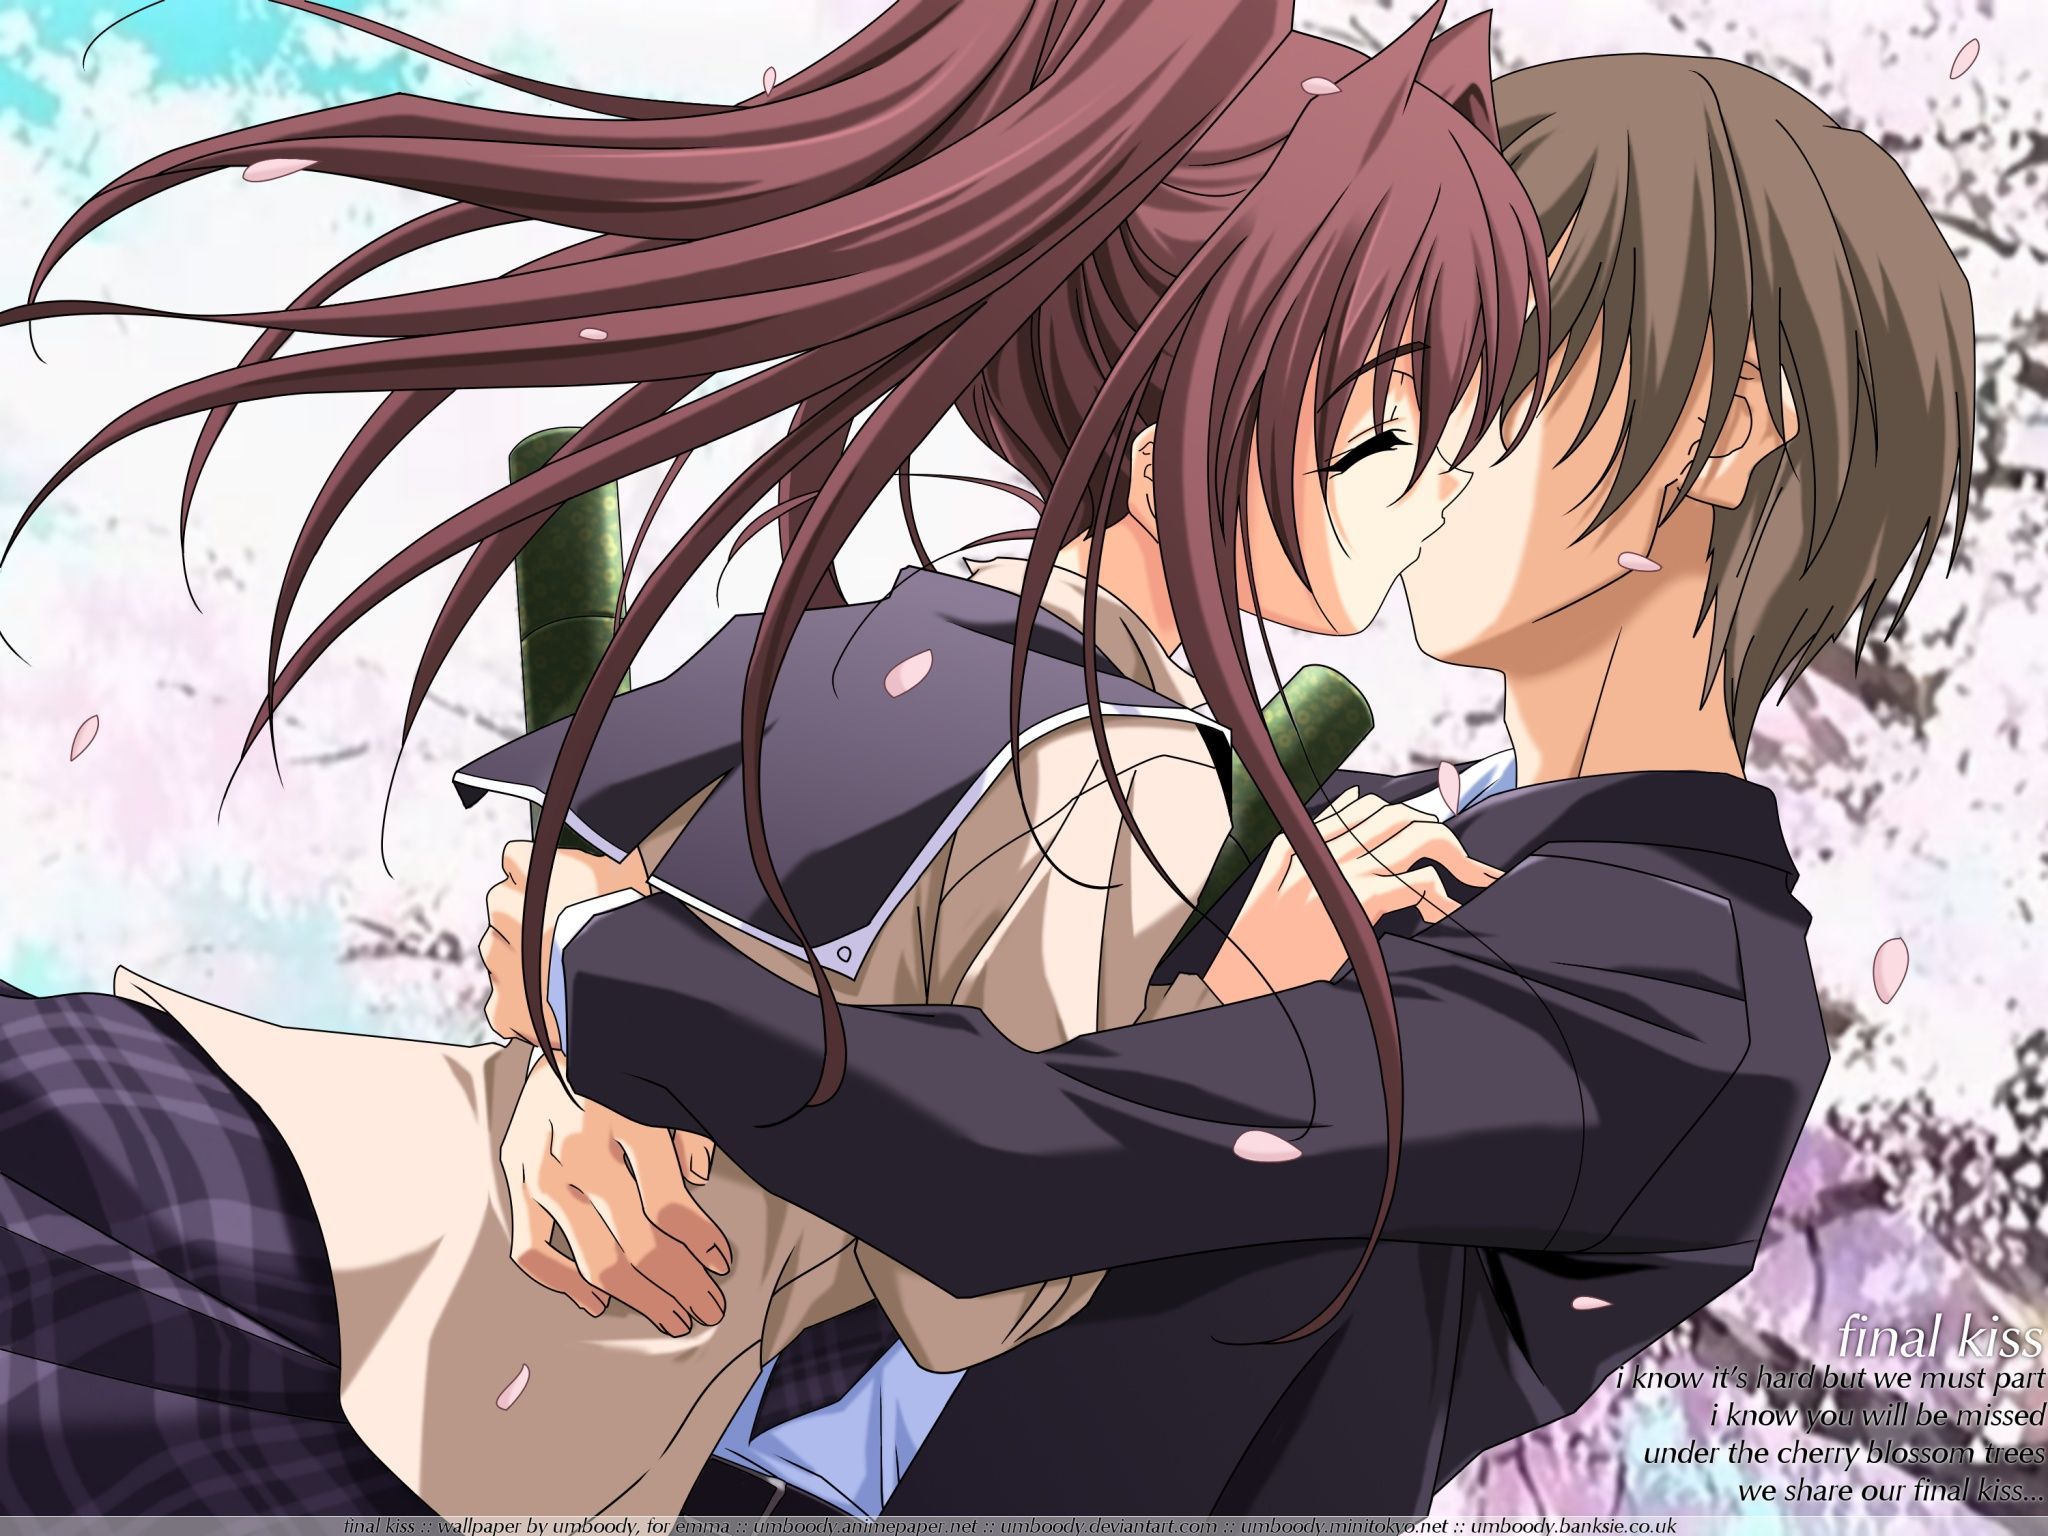 Manga Anime Artwork. Love It When They Kiss. Best Romance Anime